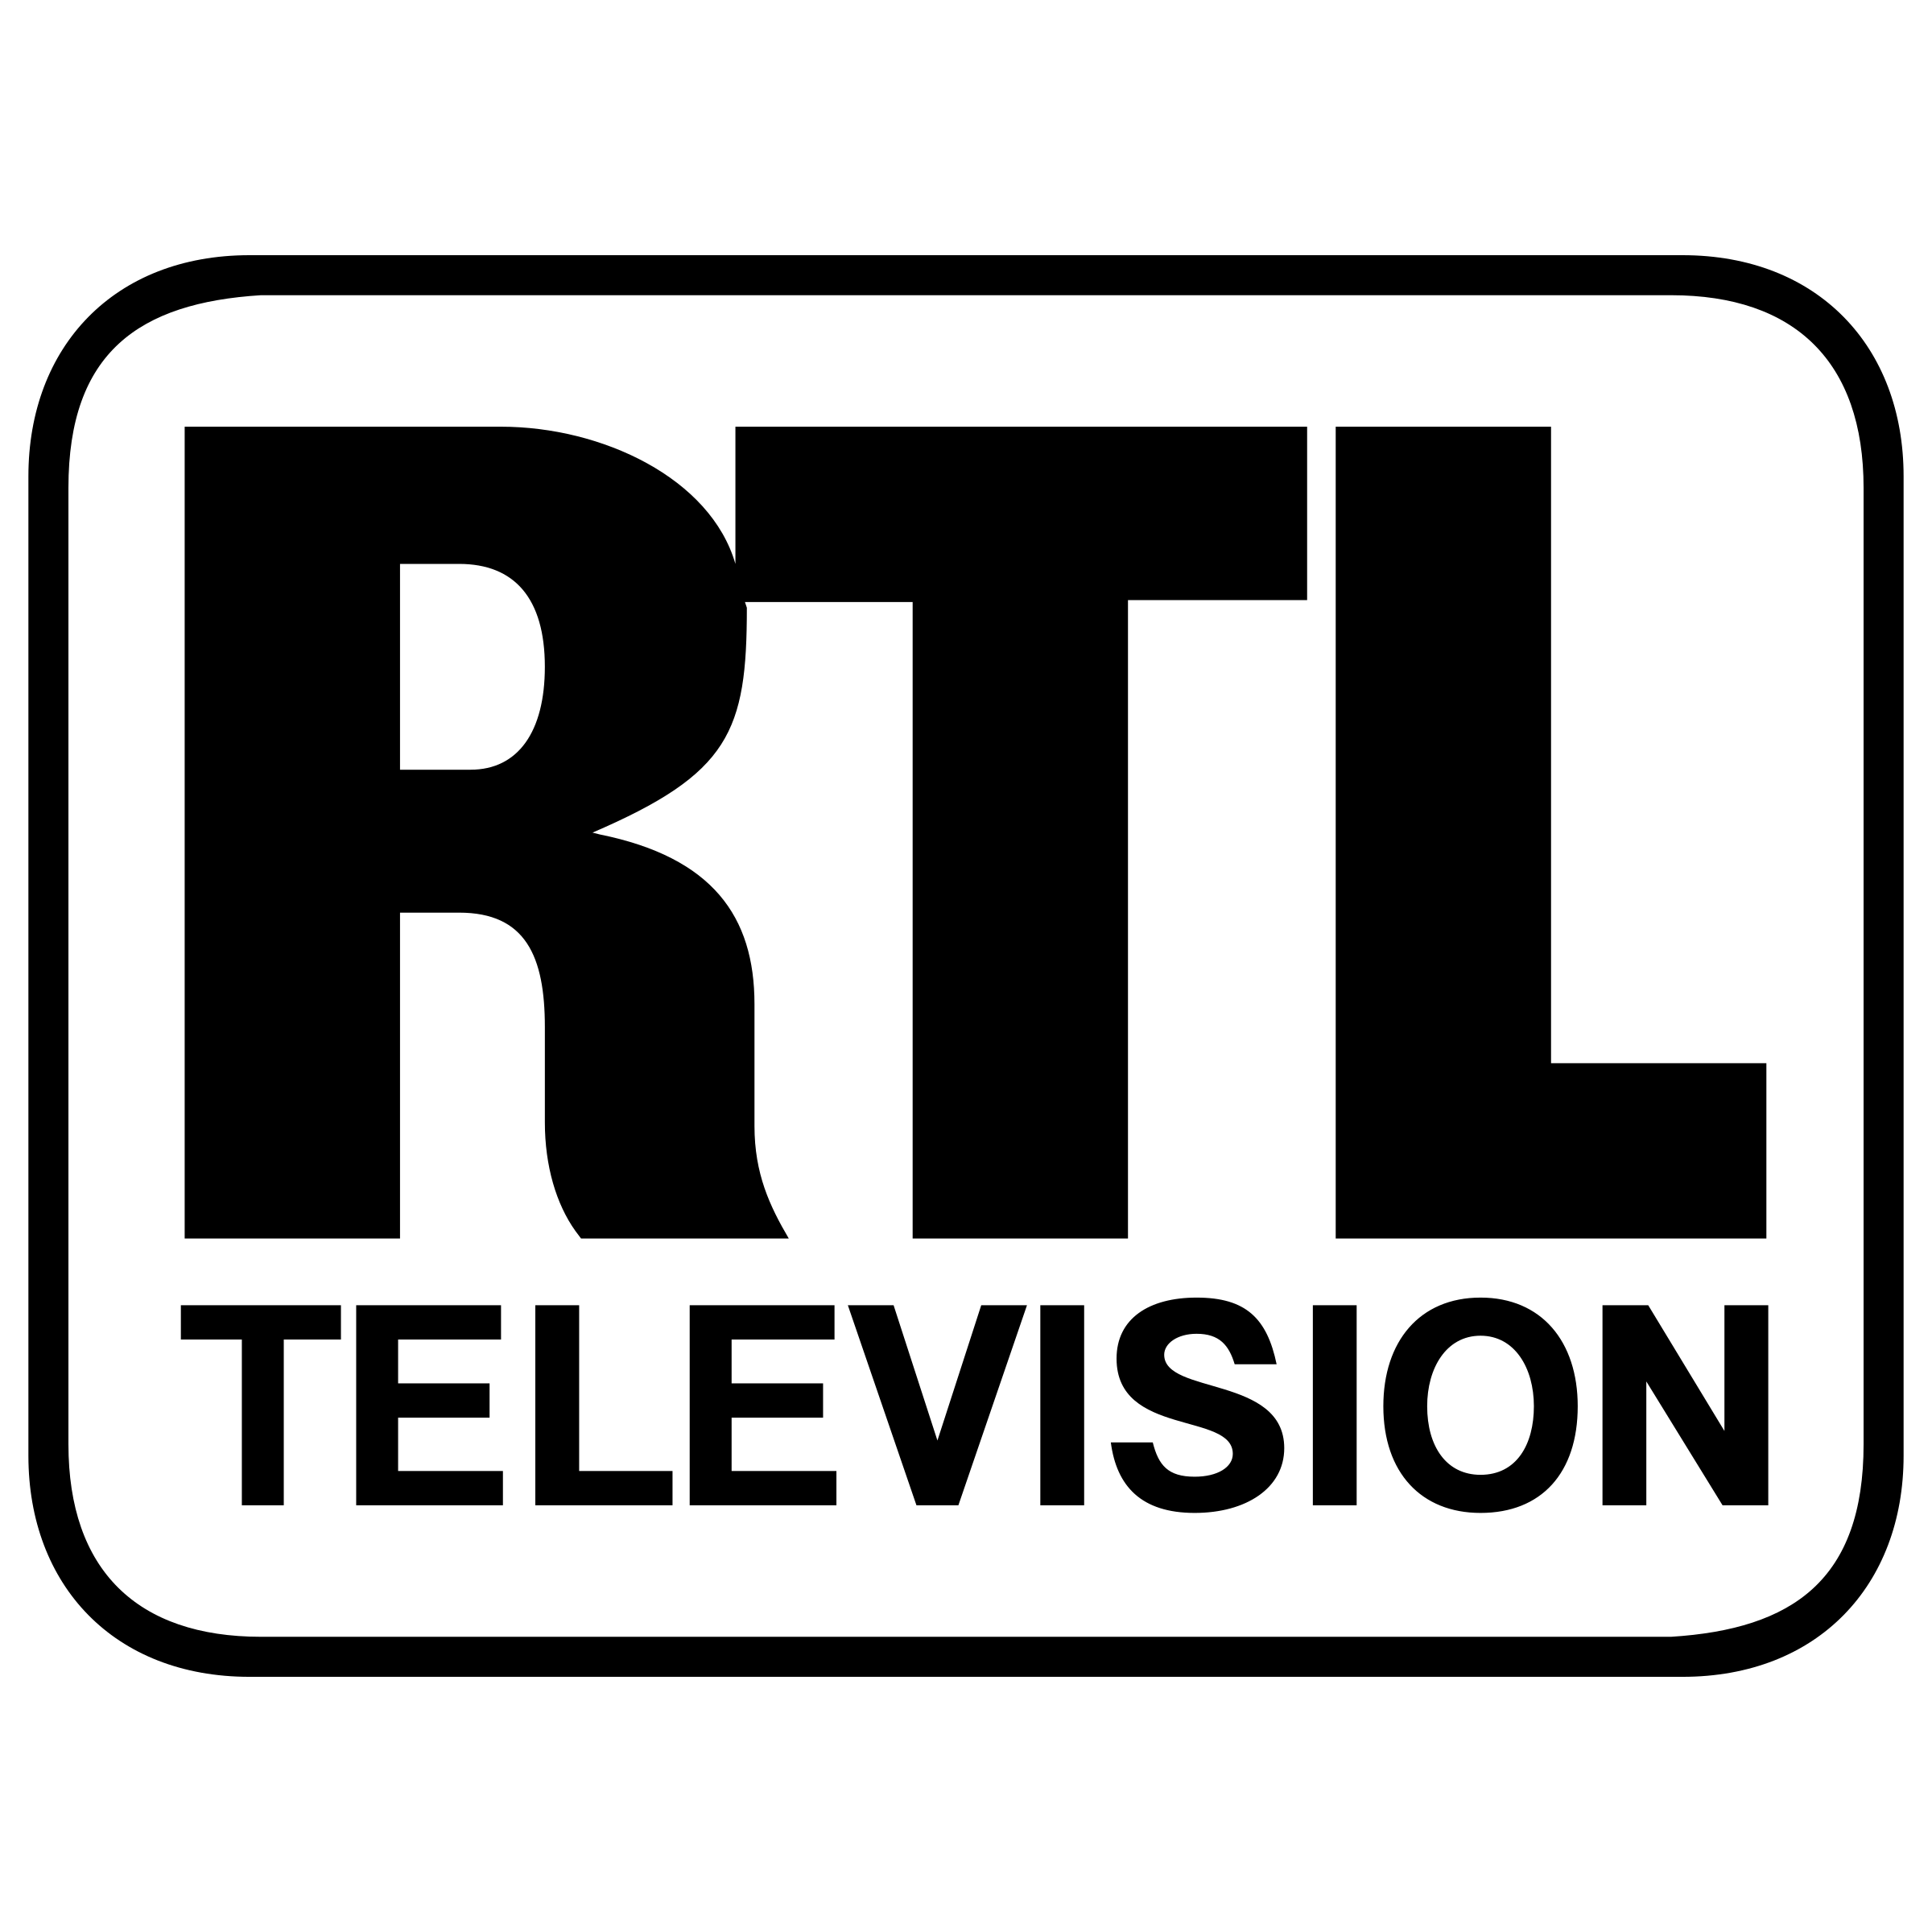 RTL Logo - RTL Television Logo PNG Transparent & SVG Vector - Freebie Supply